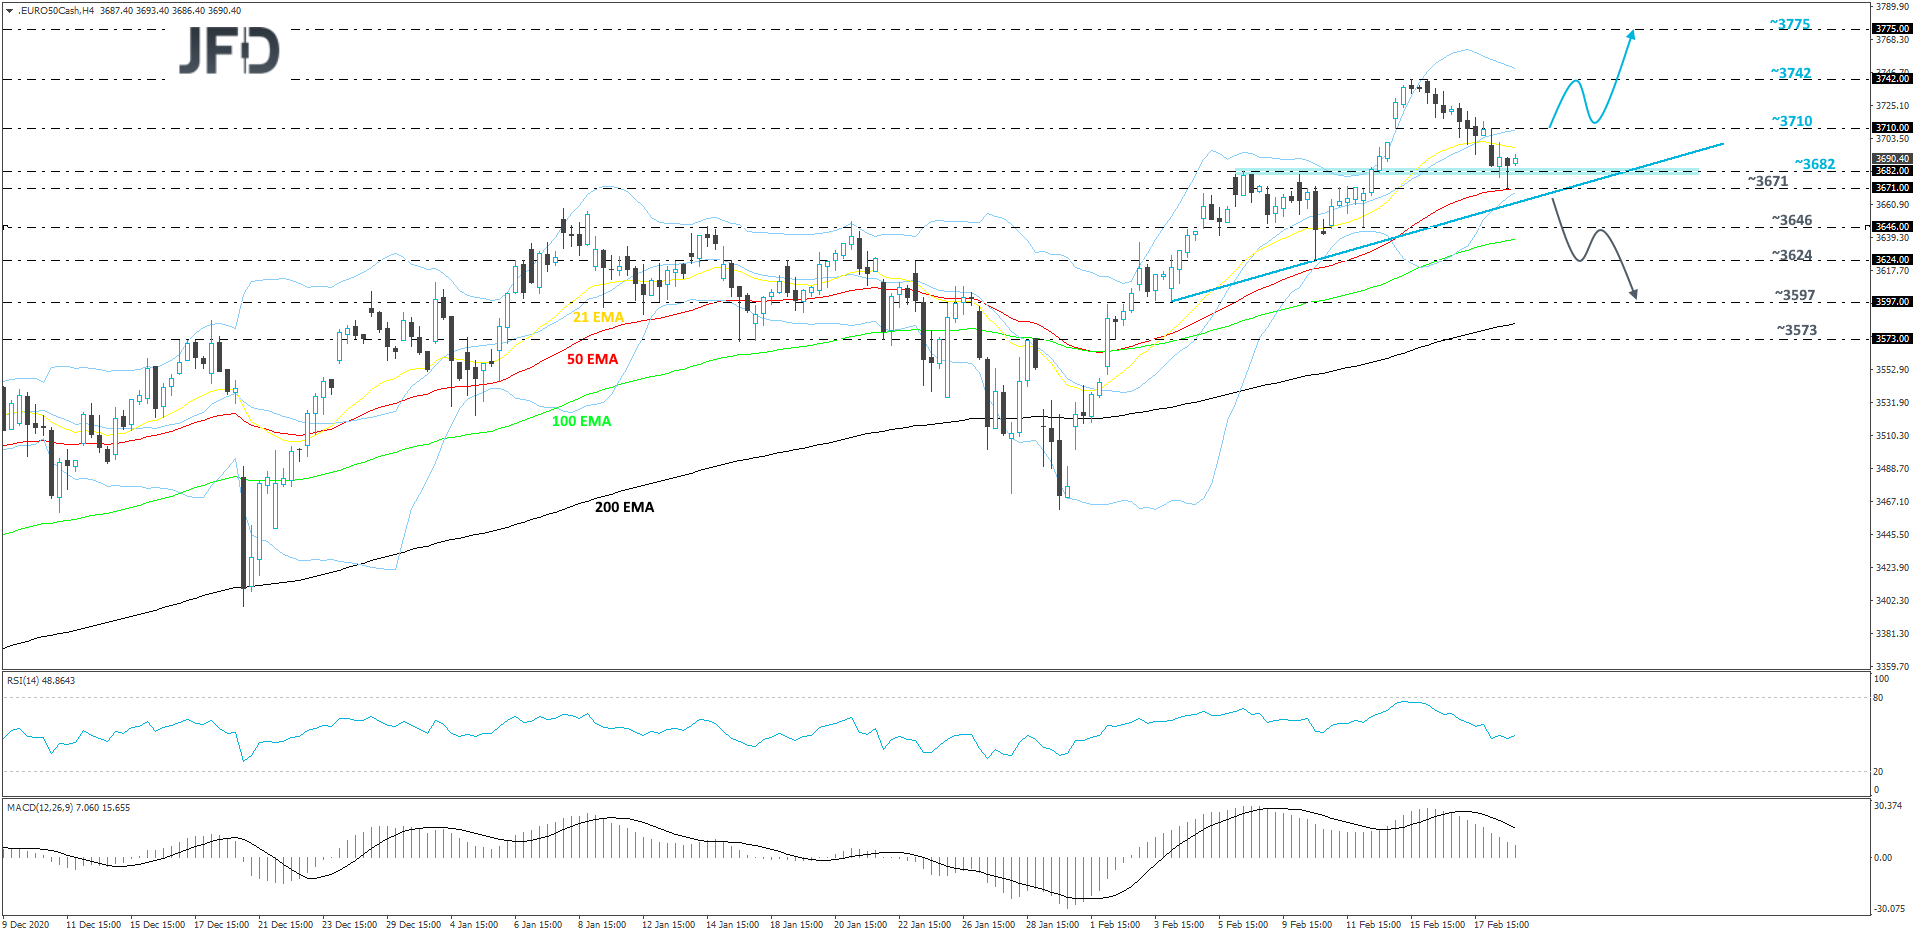 EUR Stoxx 50 4-hour chart technical analysis